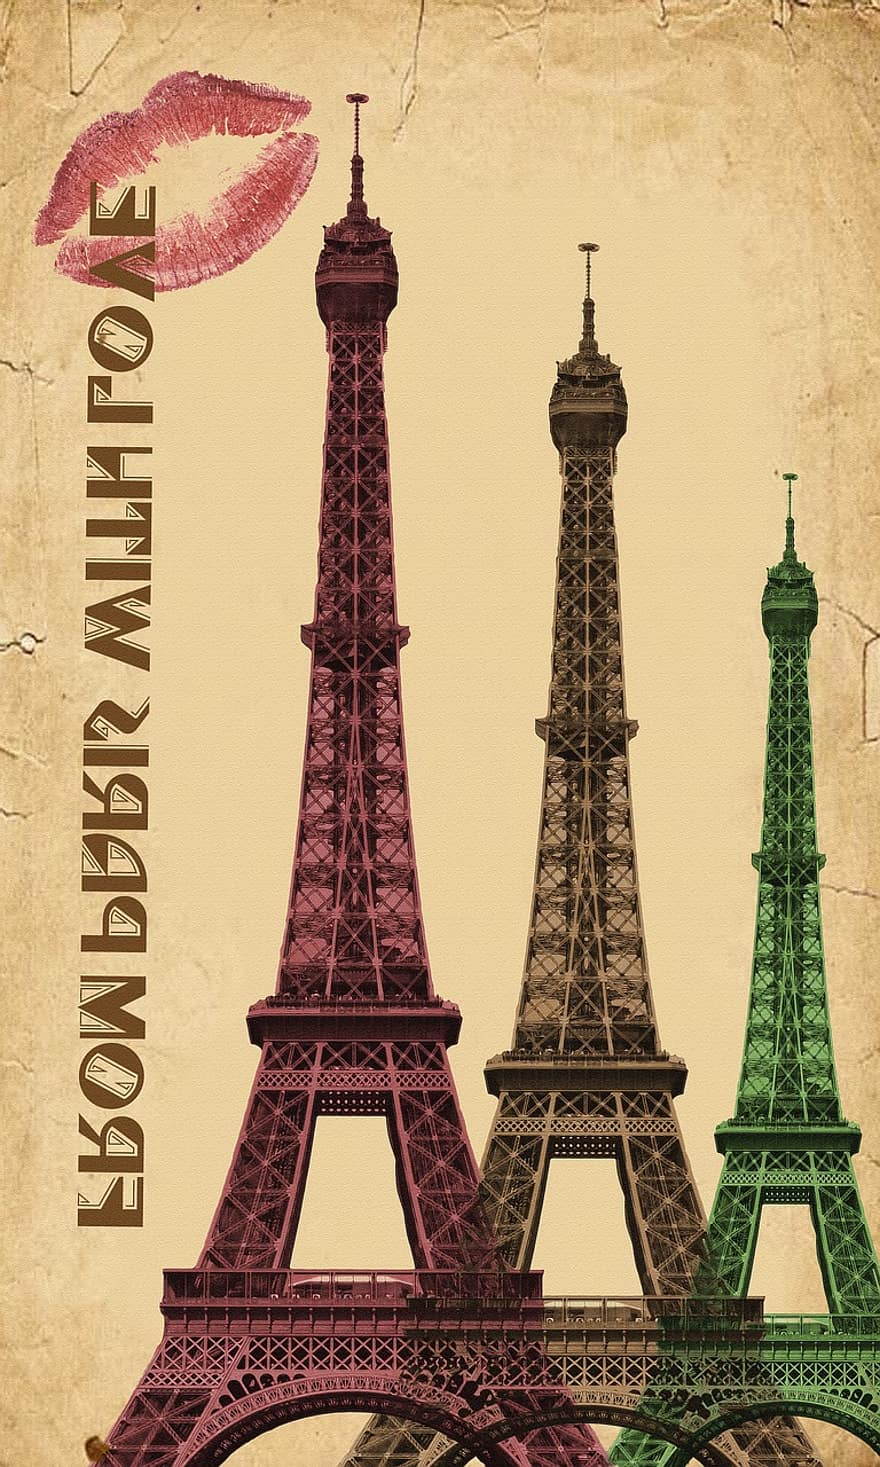 Франция, Париж, Париж, Франция, город, ориентир, путешествовать, Европа, архитектура, Французский, башня, известный